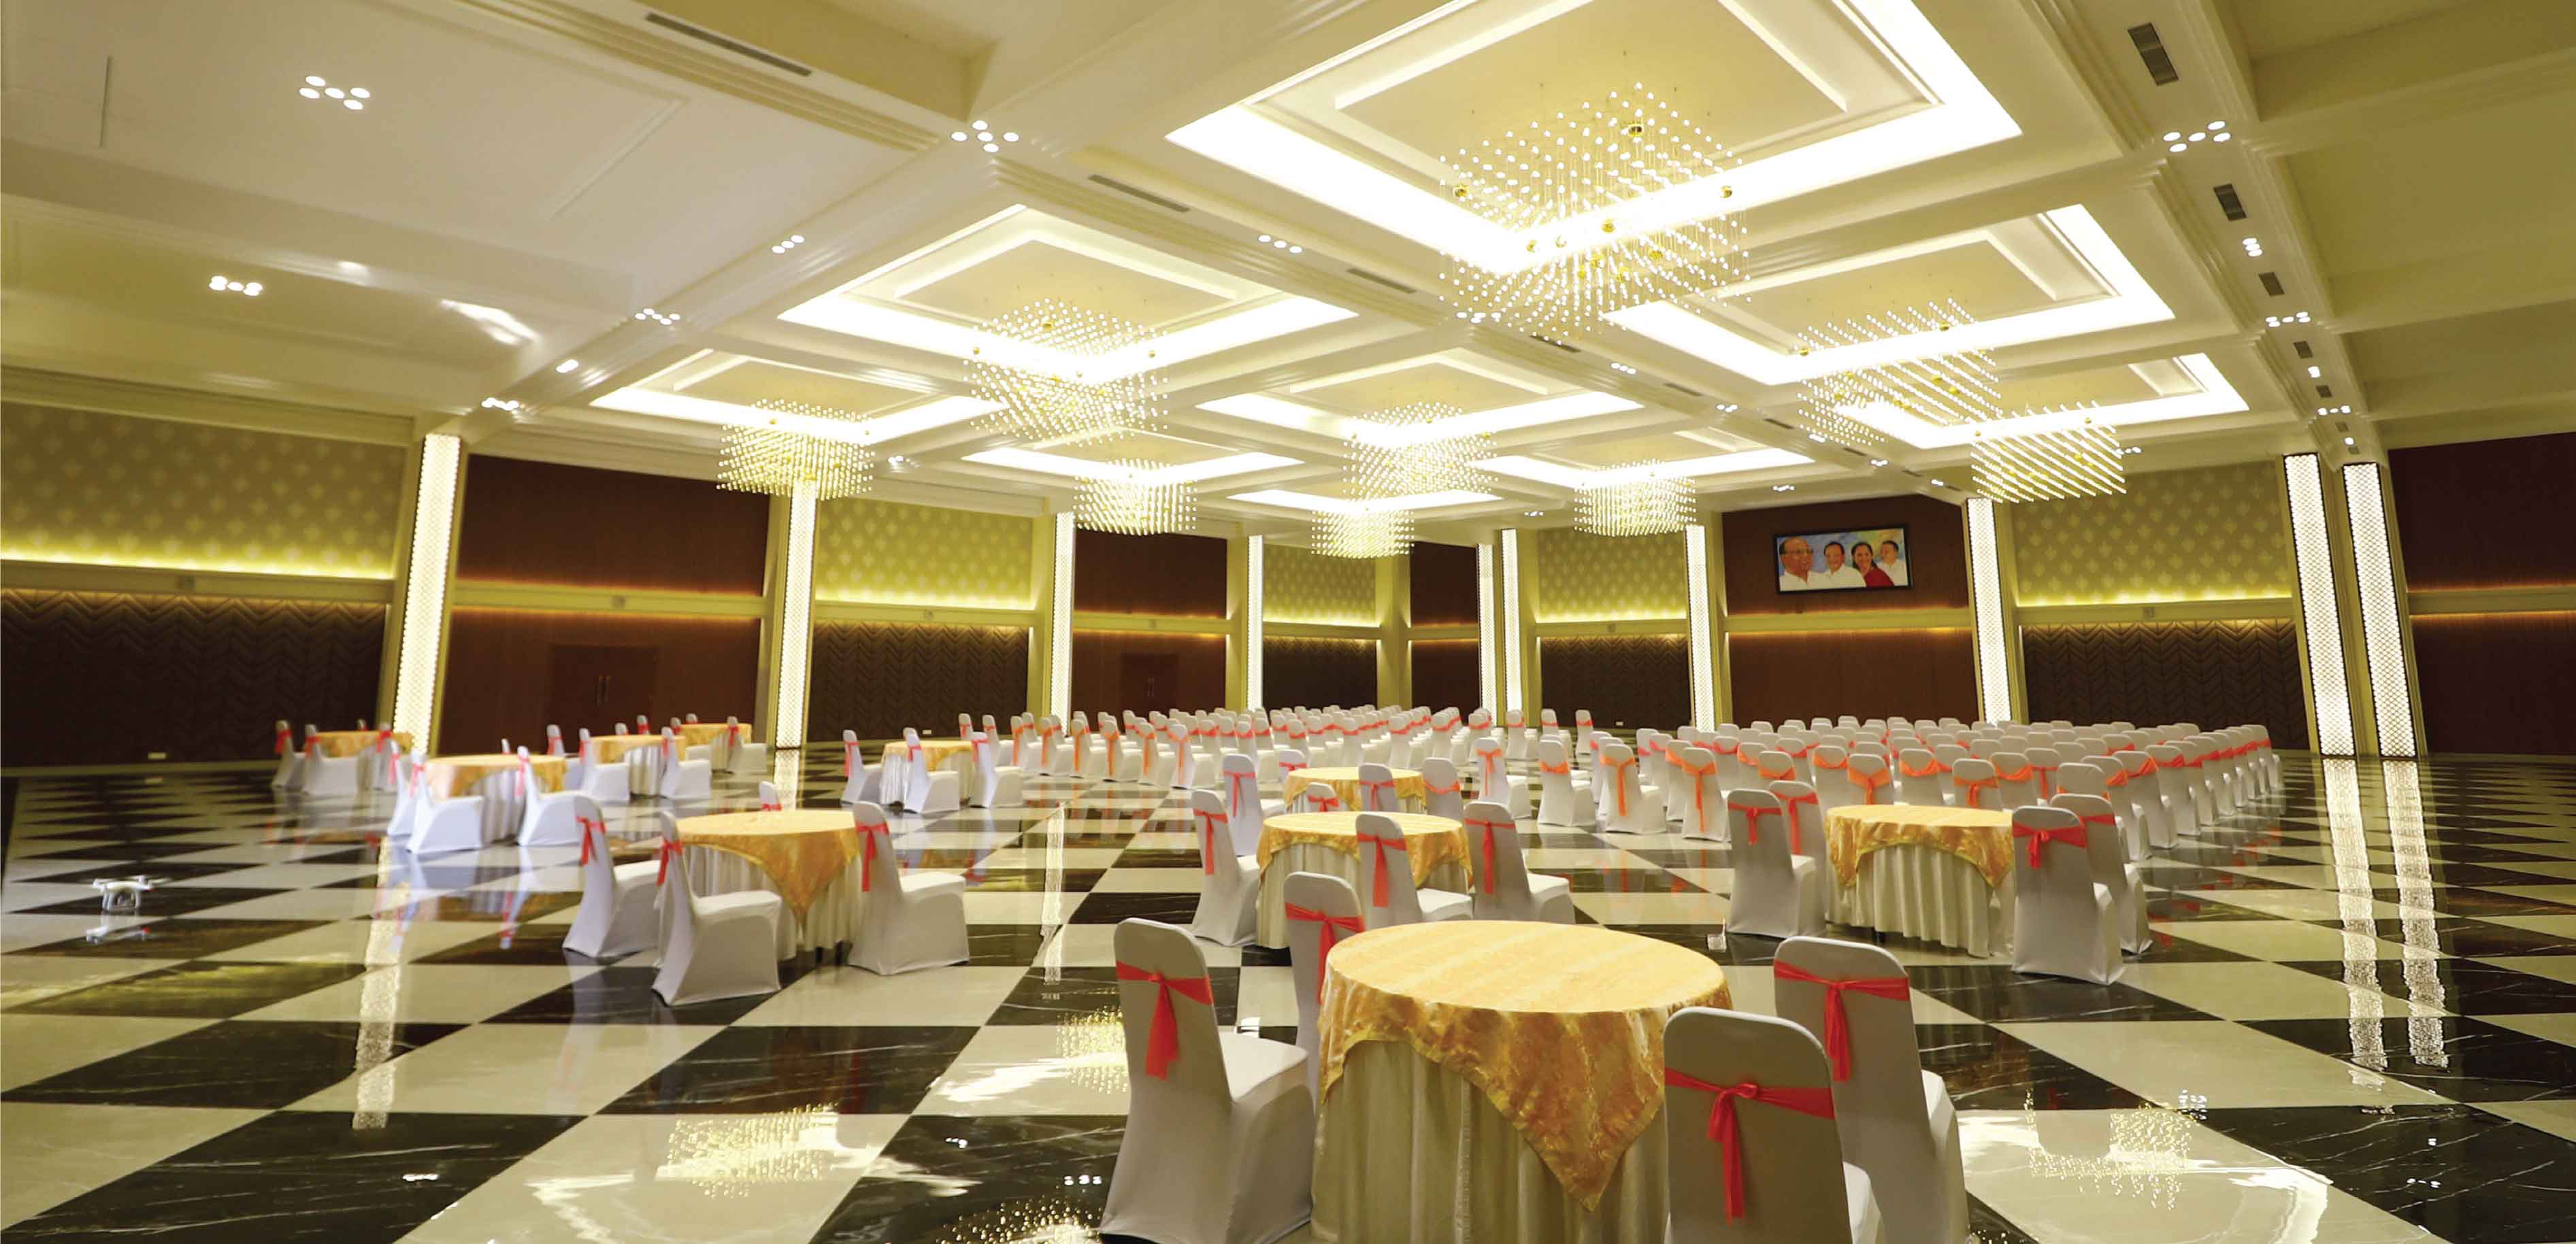 Rukmini big indoor banquet hall at Nishigandha Hinjewadi Pune